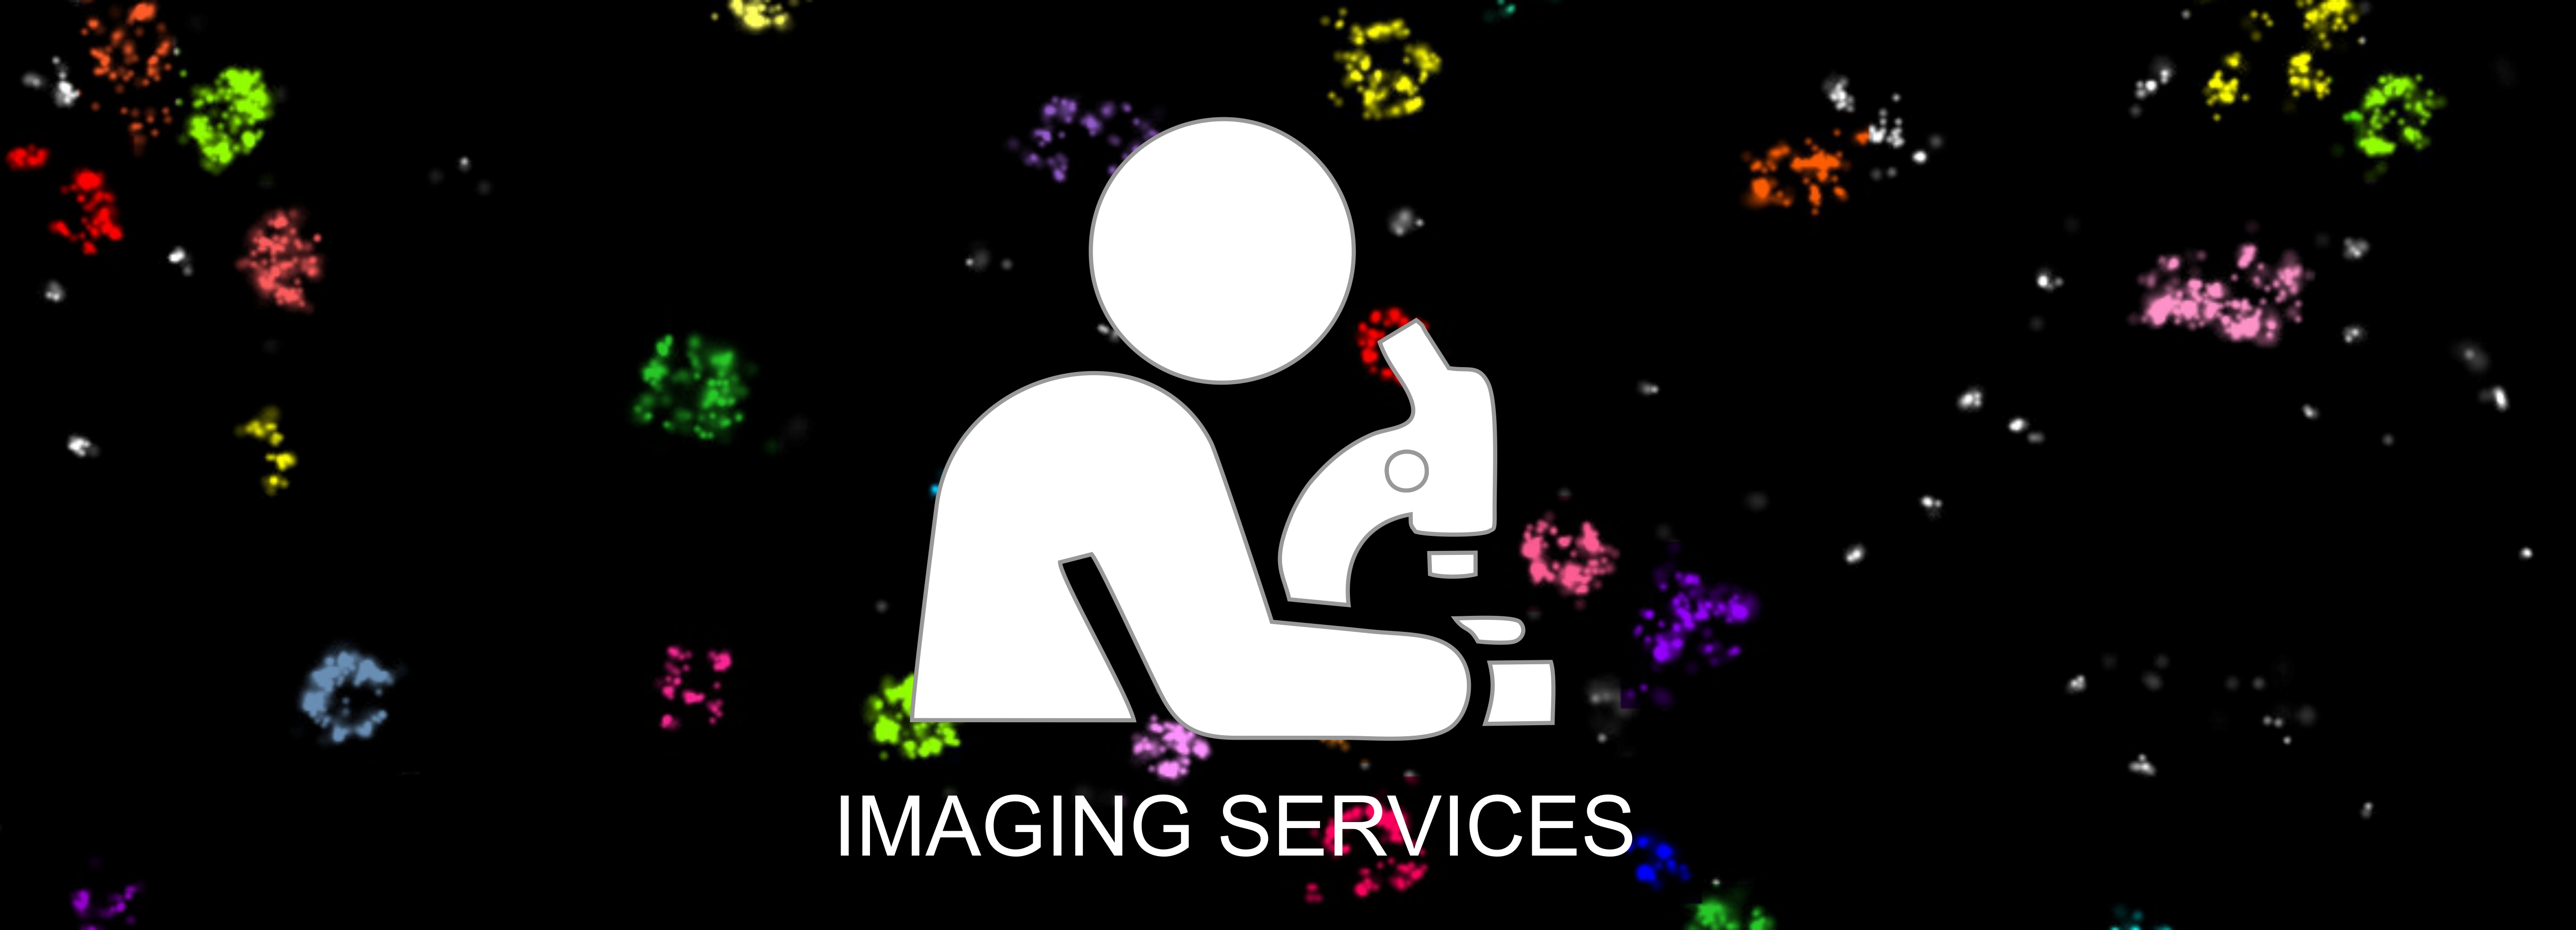 Imaging Services header